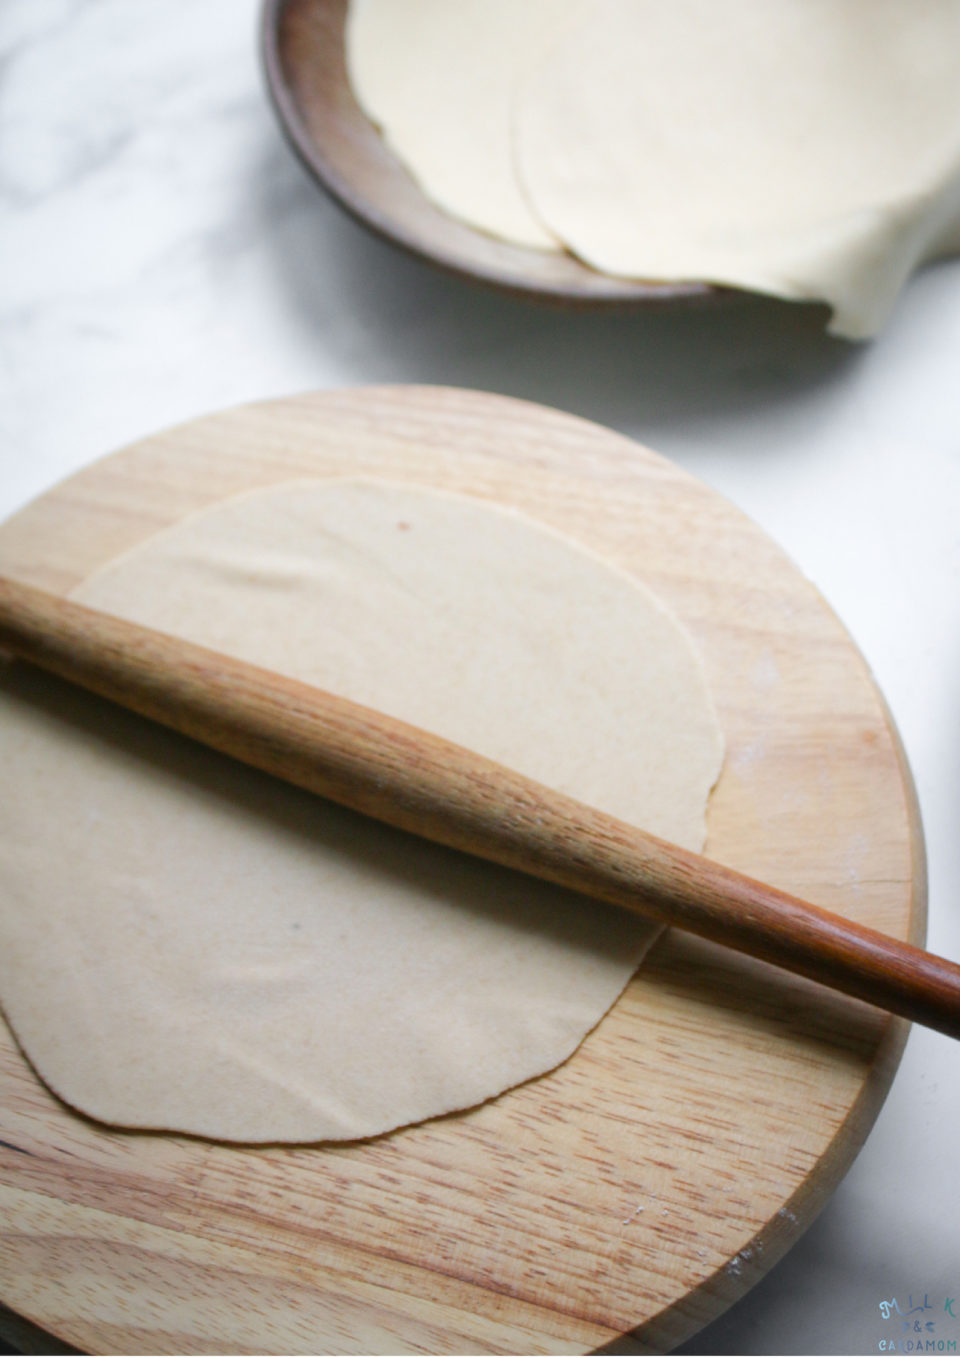 Rotli Roti Chapati Recipe| MIlk and Cardamom